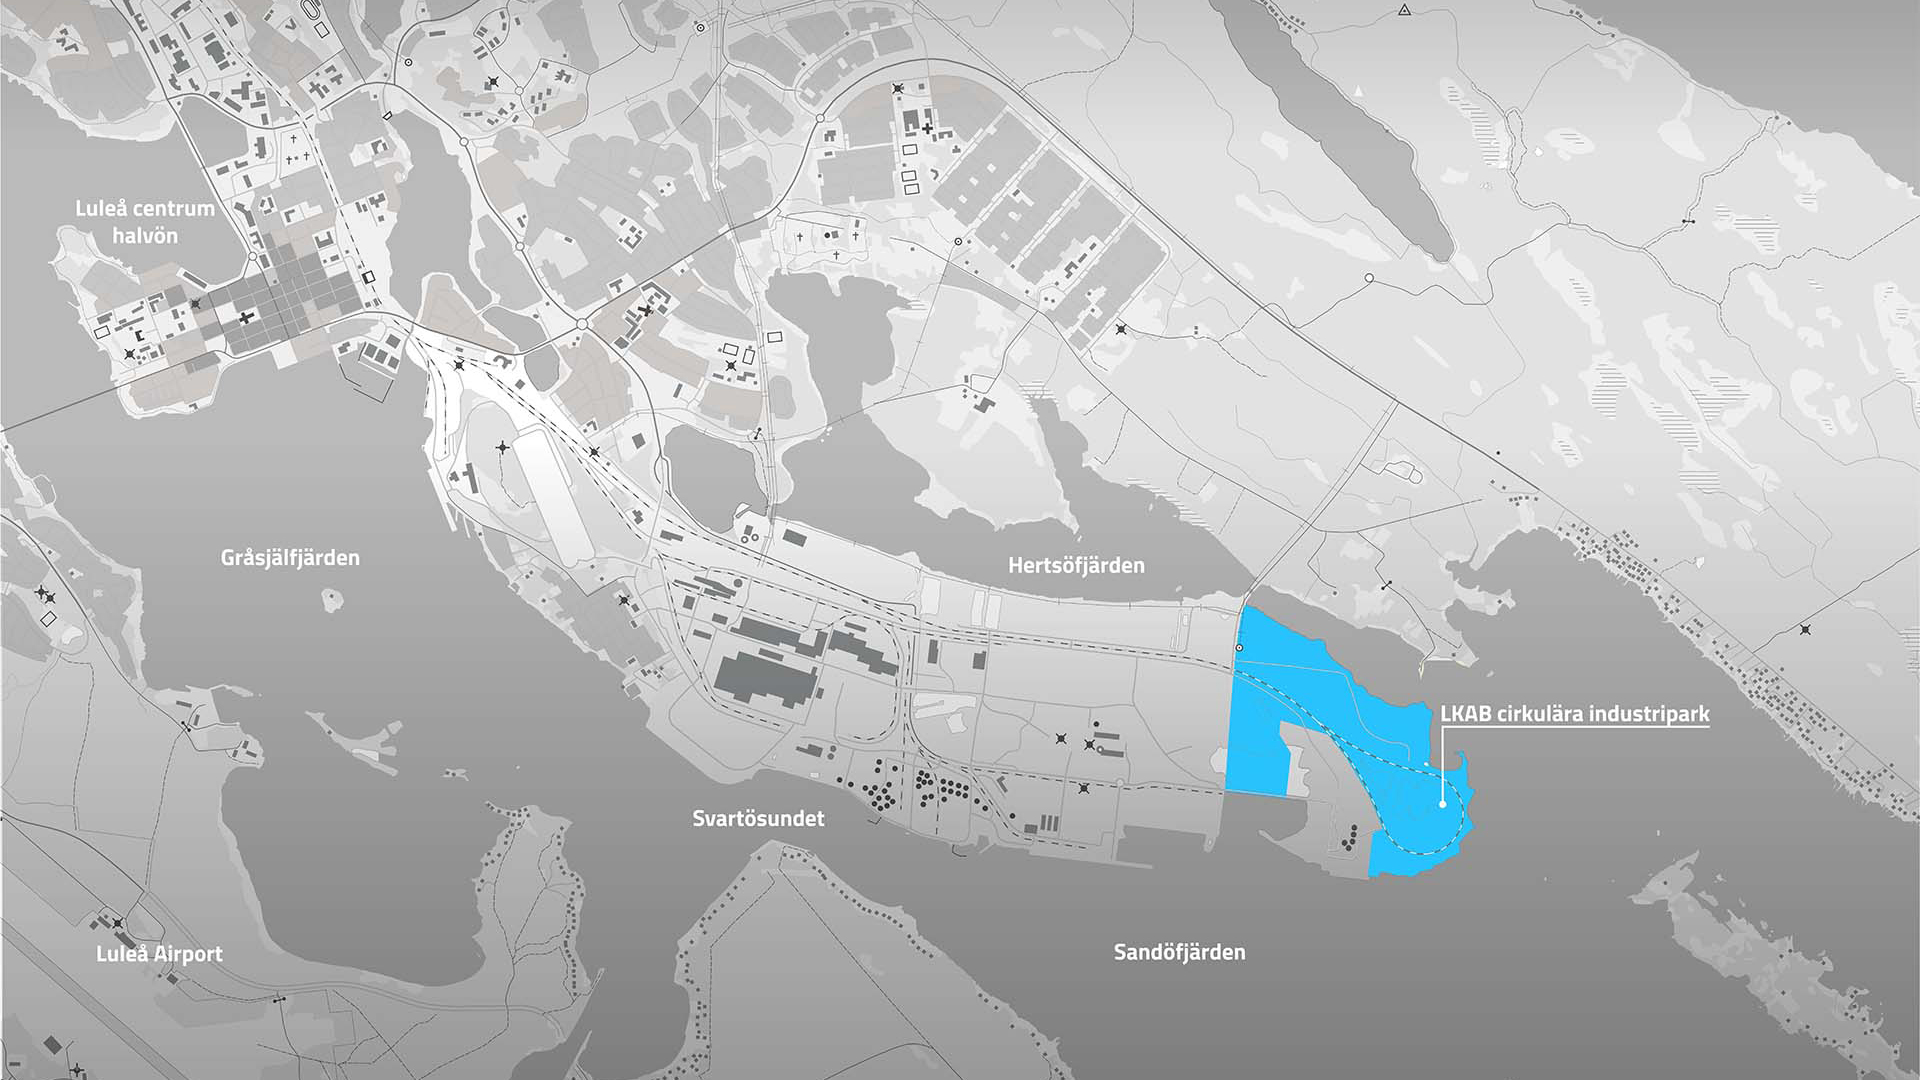 Map over LKAB's circular industrial park in Luleå. 